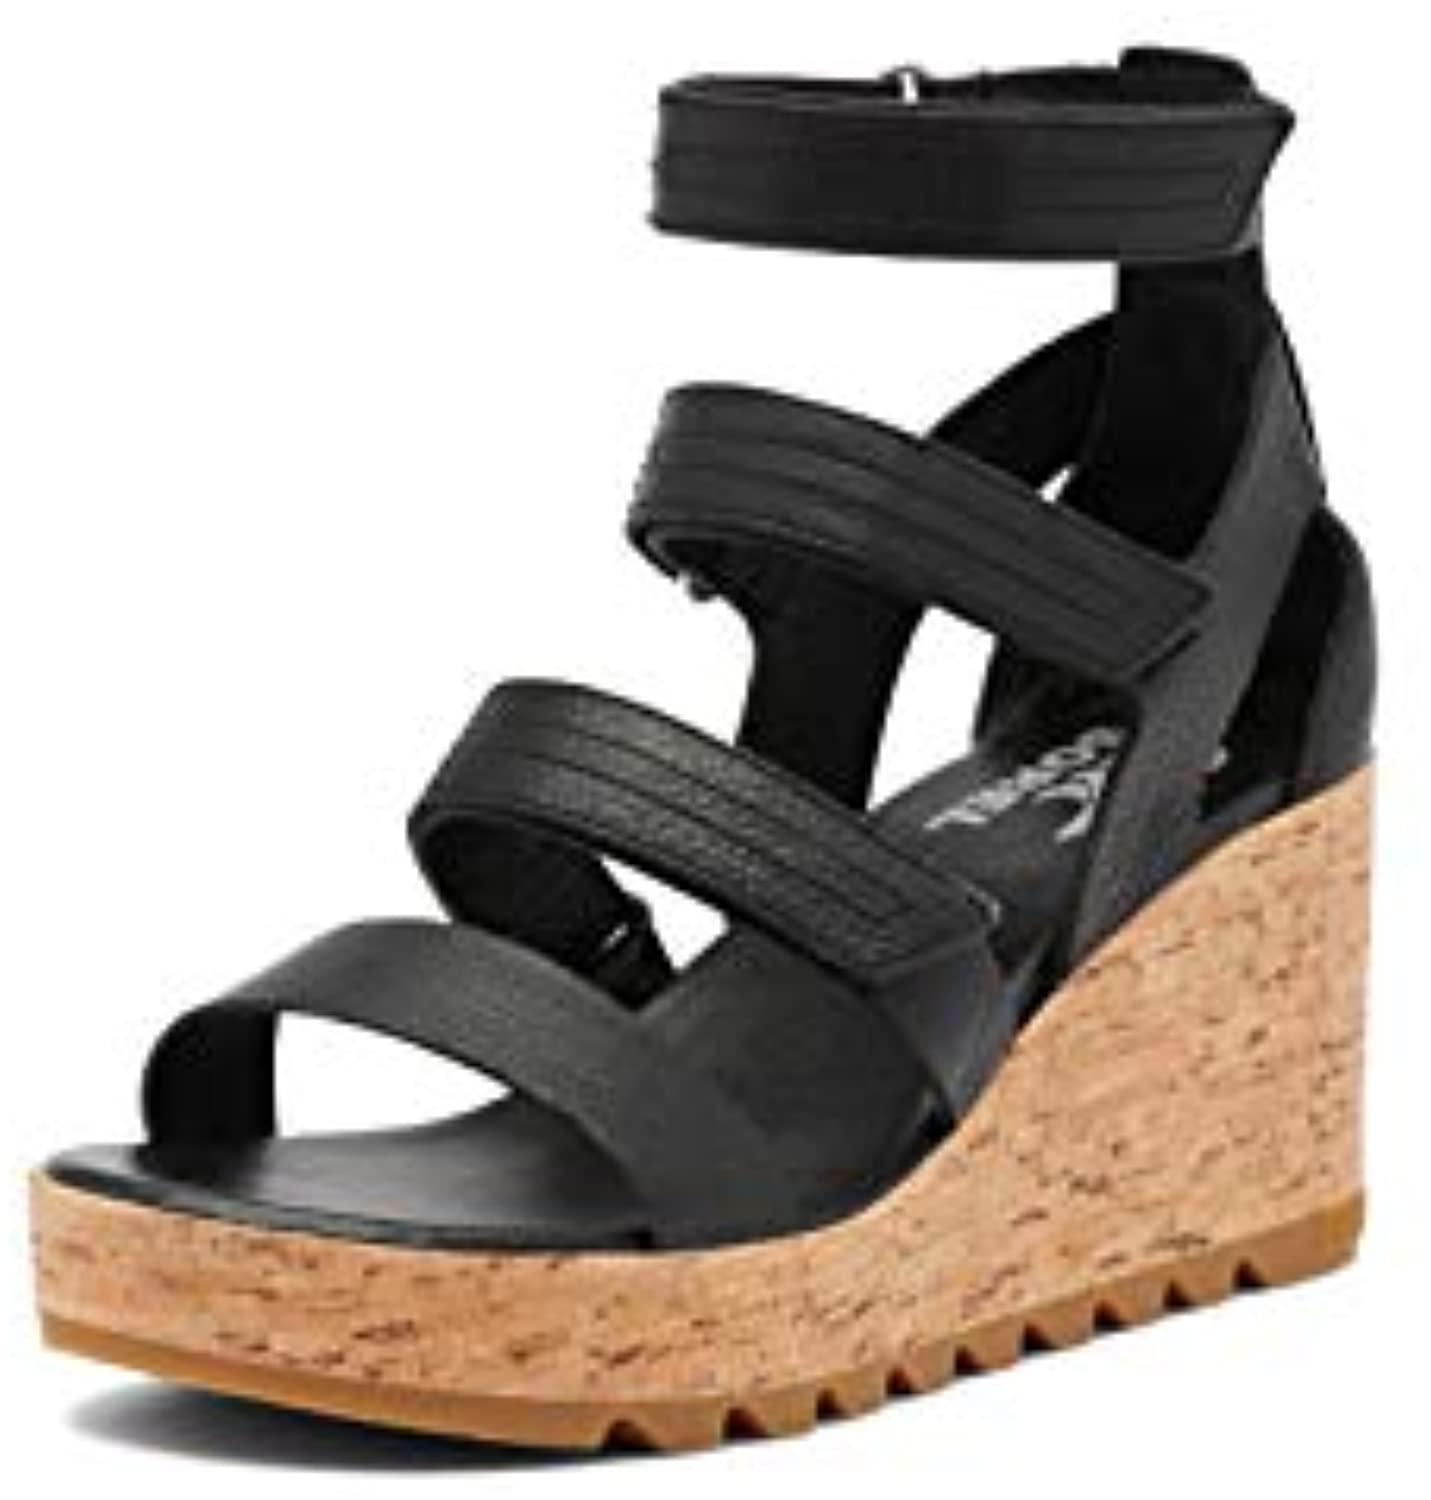 Sorel Cameron Wedge Multi Strap Women's Sandals - Free Shipping